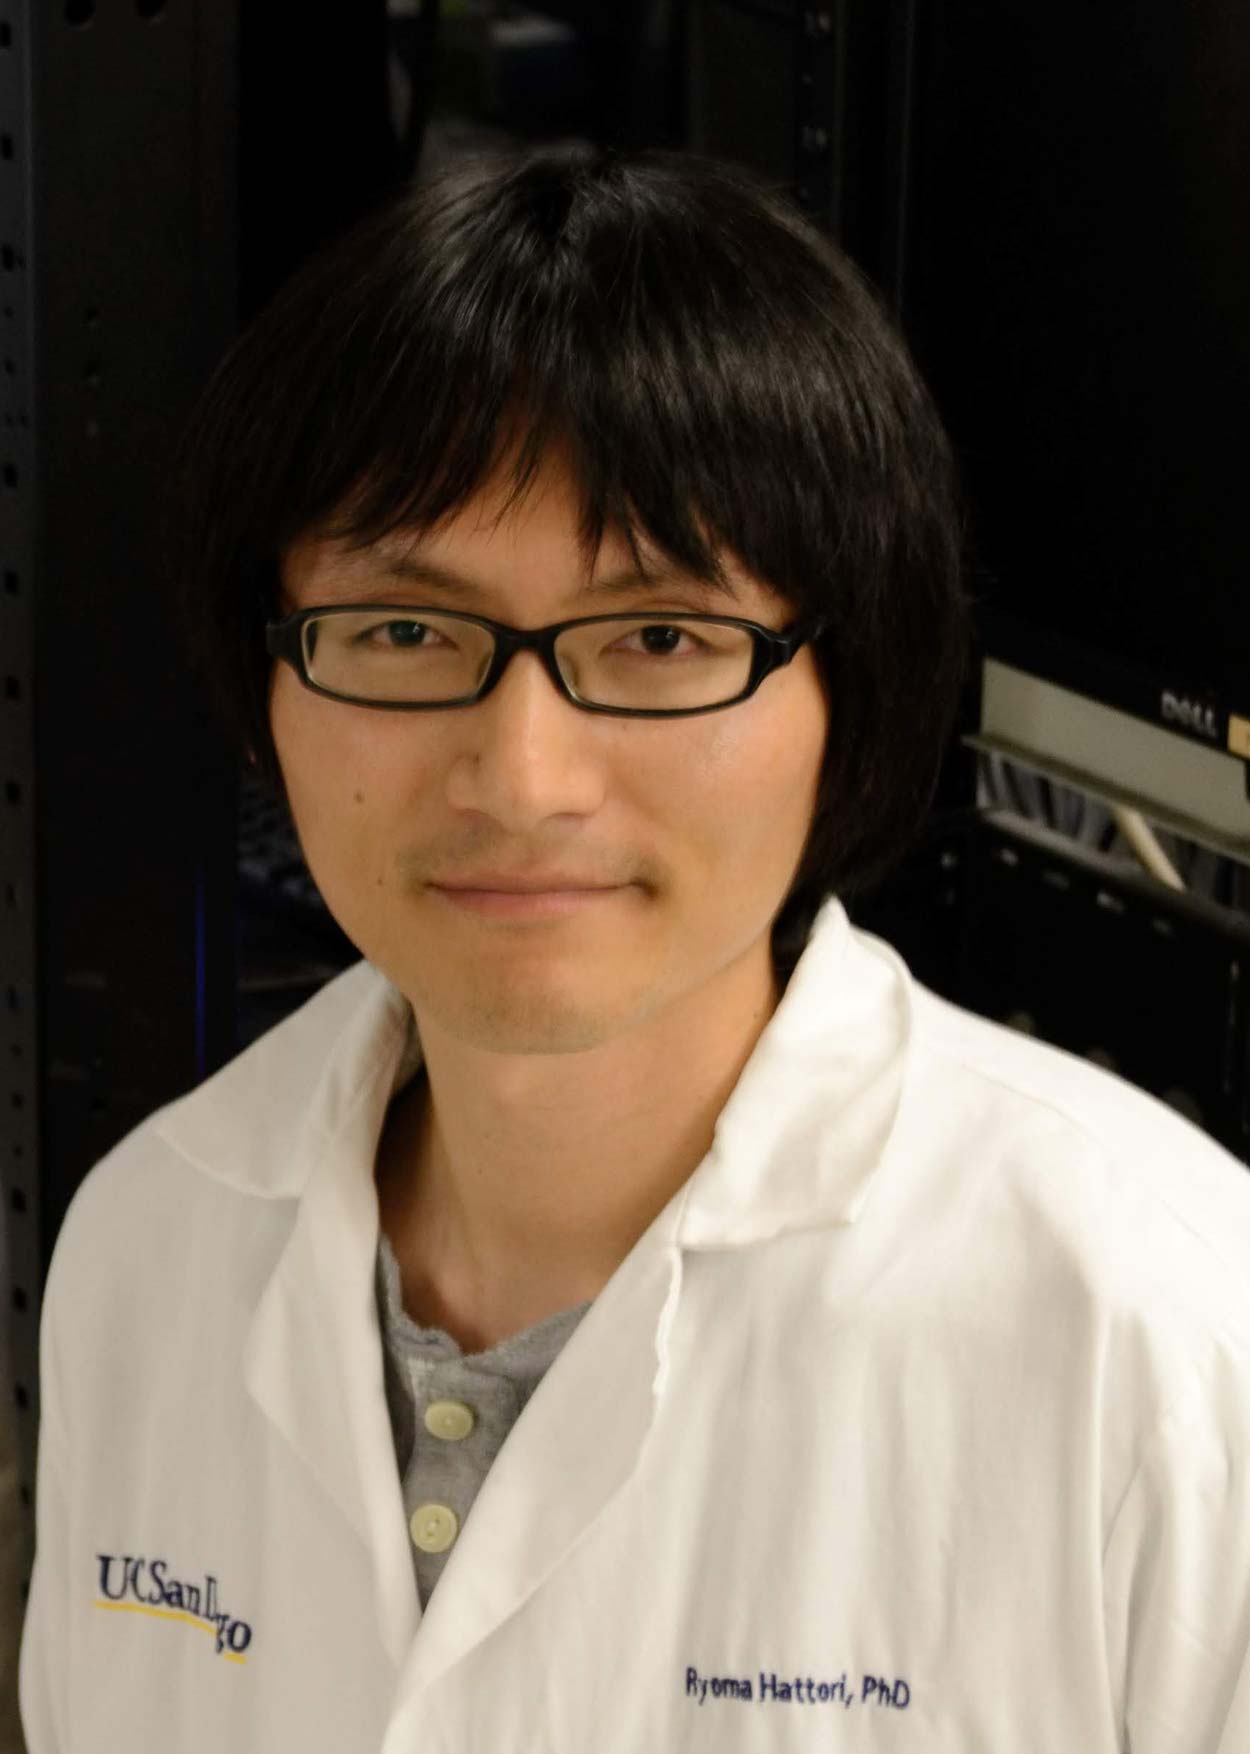 Ryoma Hattori smiling in a lab coat